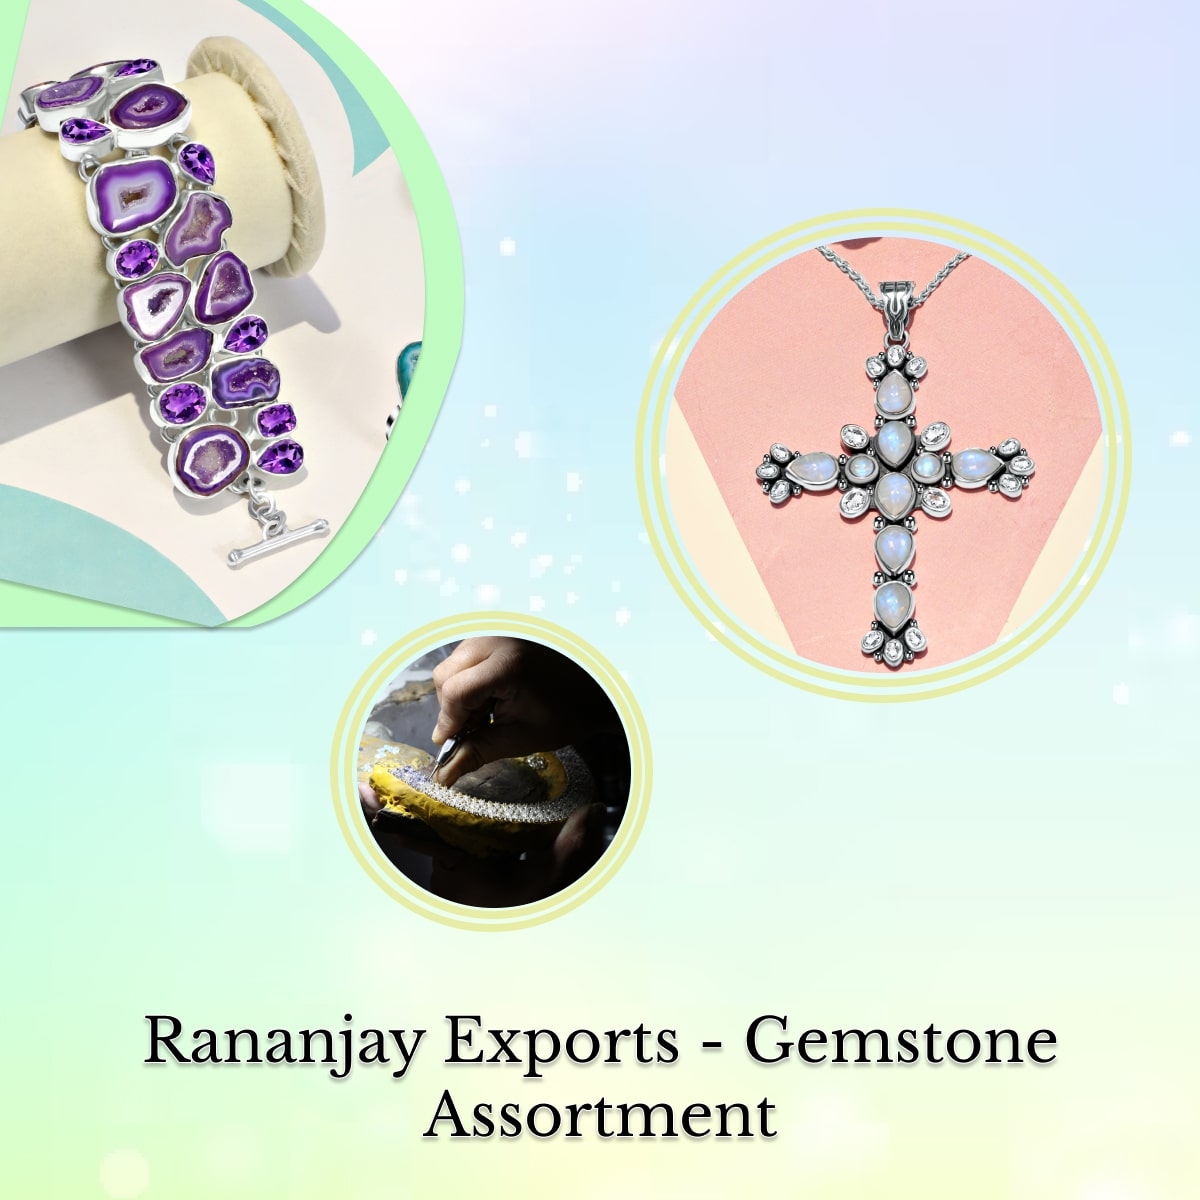 Gemstones Used at Rananjay Exports